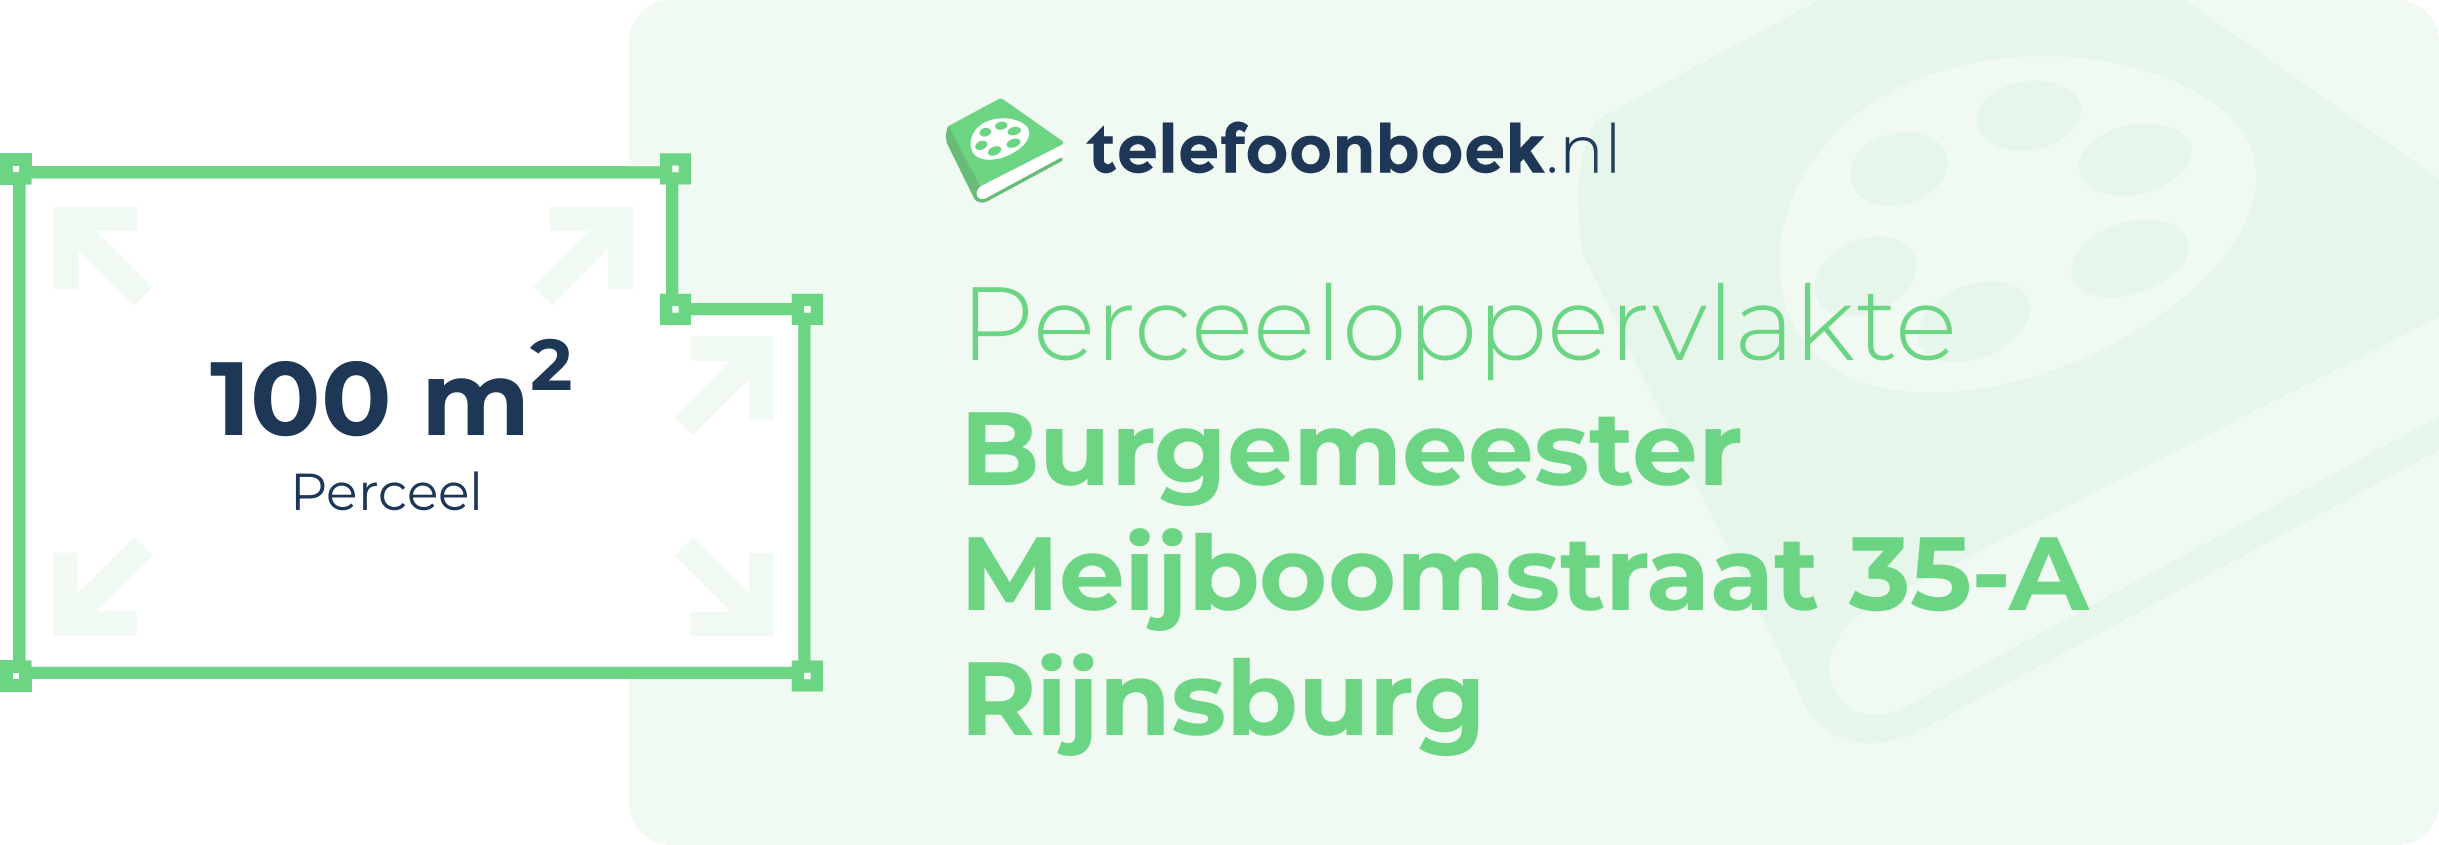 Perceeloppervlakte Burgemeester Meijboomstraat 35-A Rijnsburg